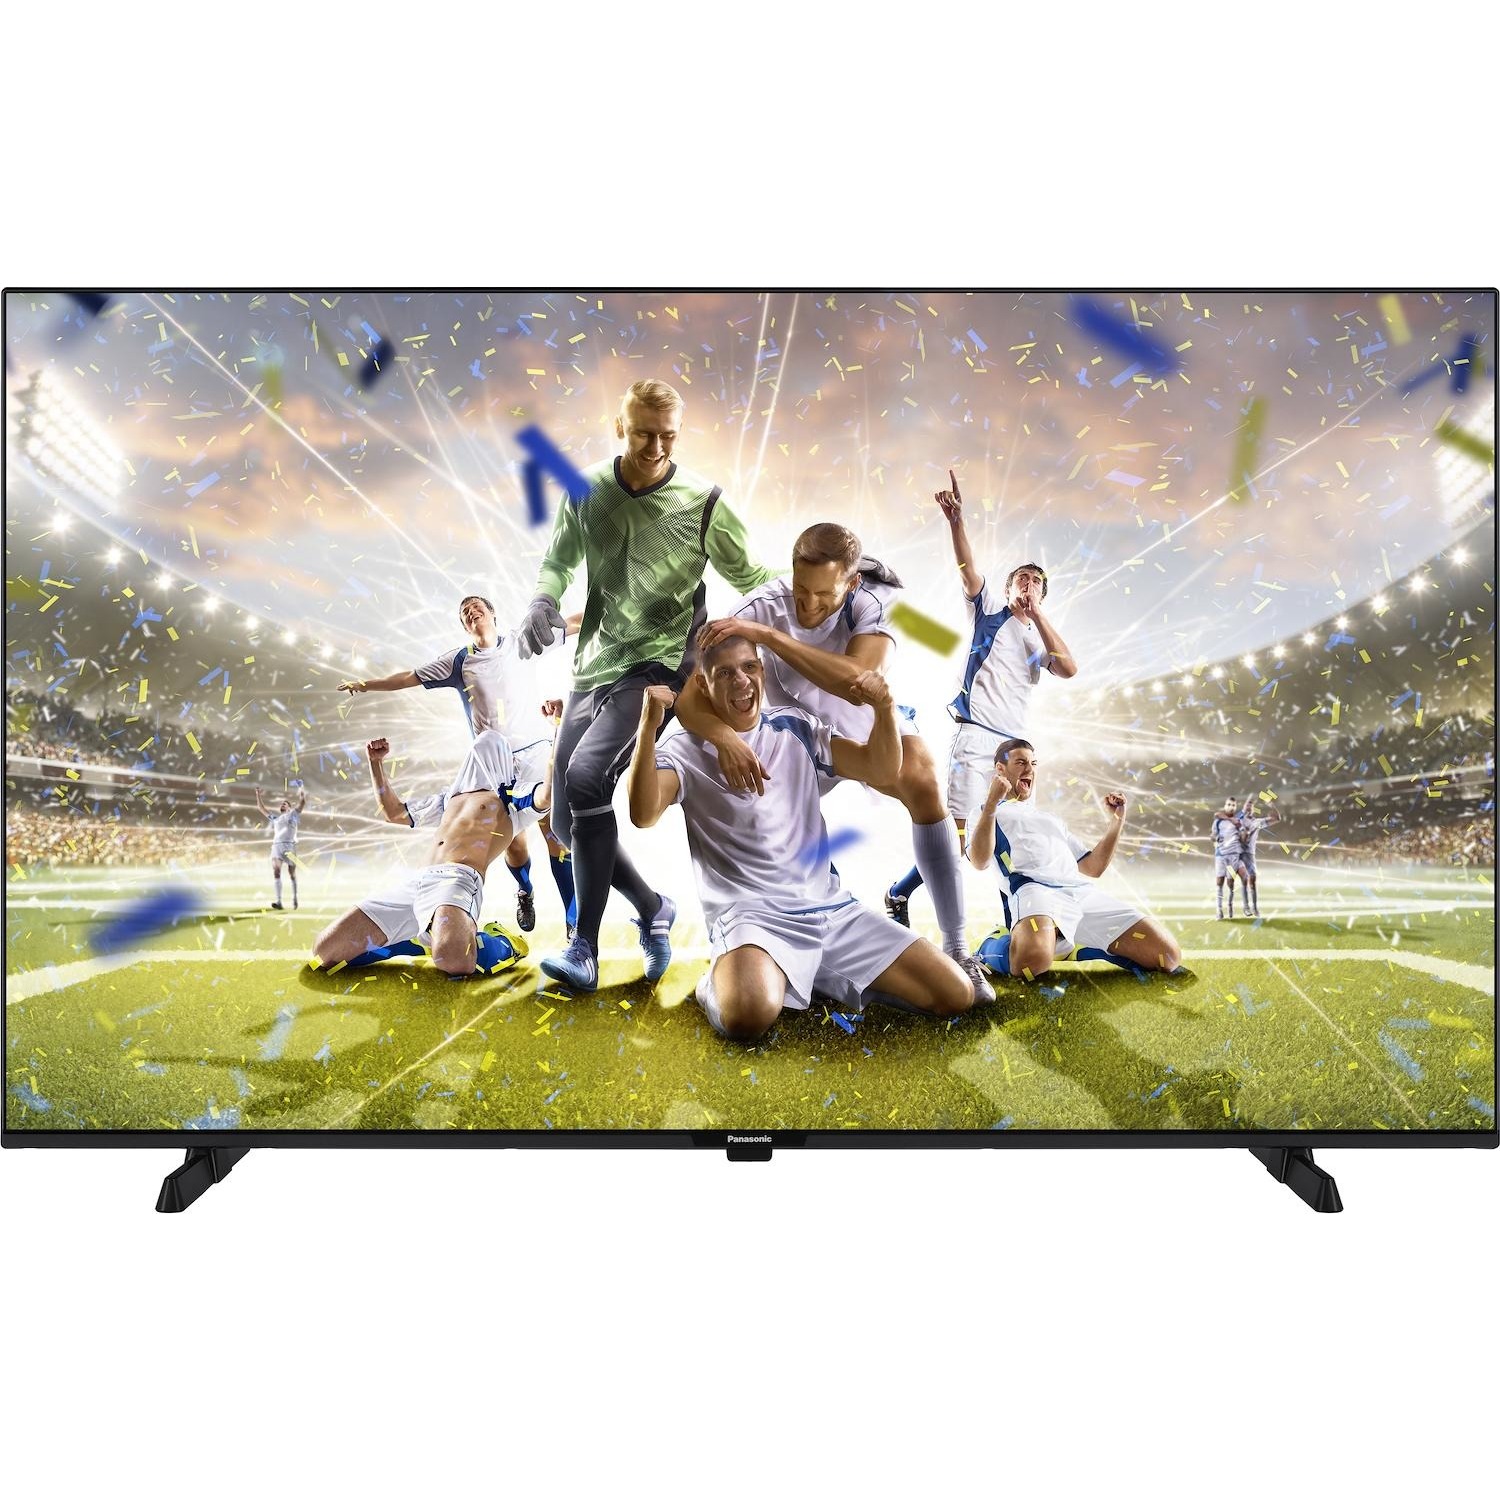 Immagine per TV LED Smart 4K UHD Panasonic 55MX600E da DIMOStore